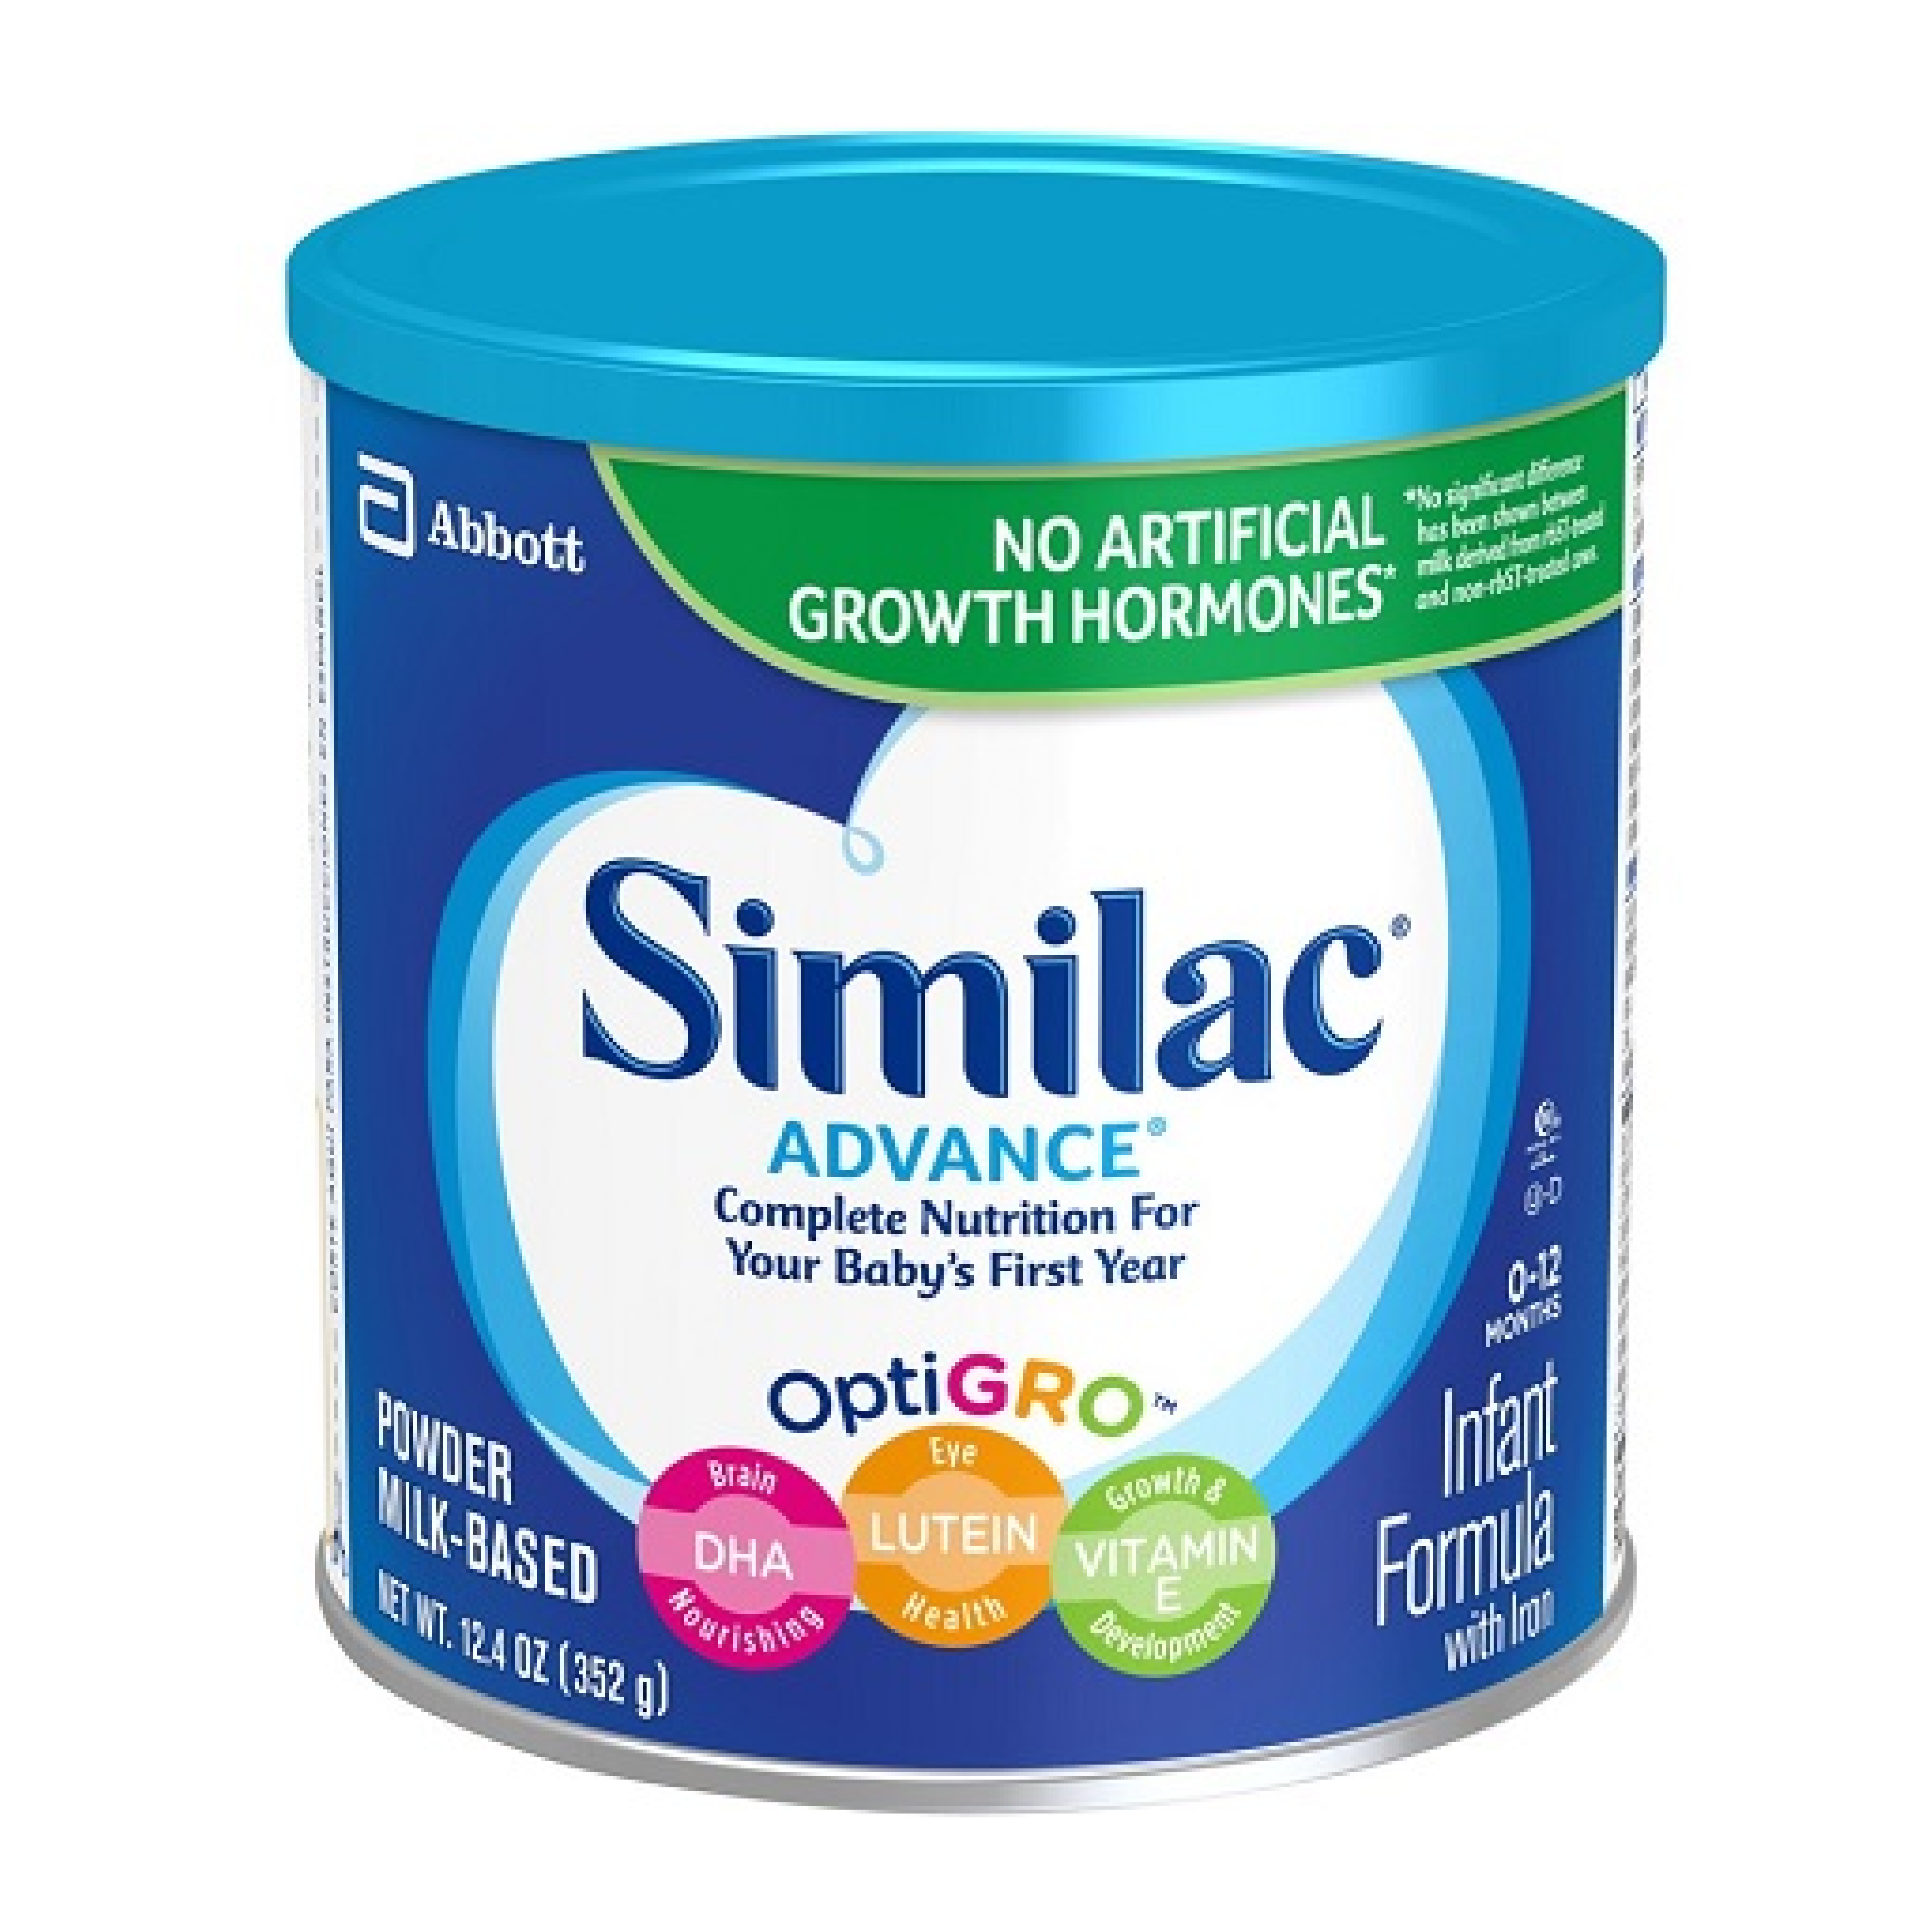 Similac Advance Powder Milk-Based Baby Formula 12.4oz